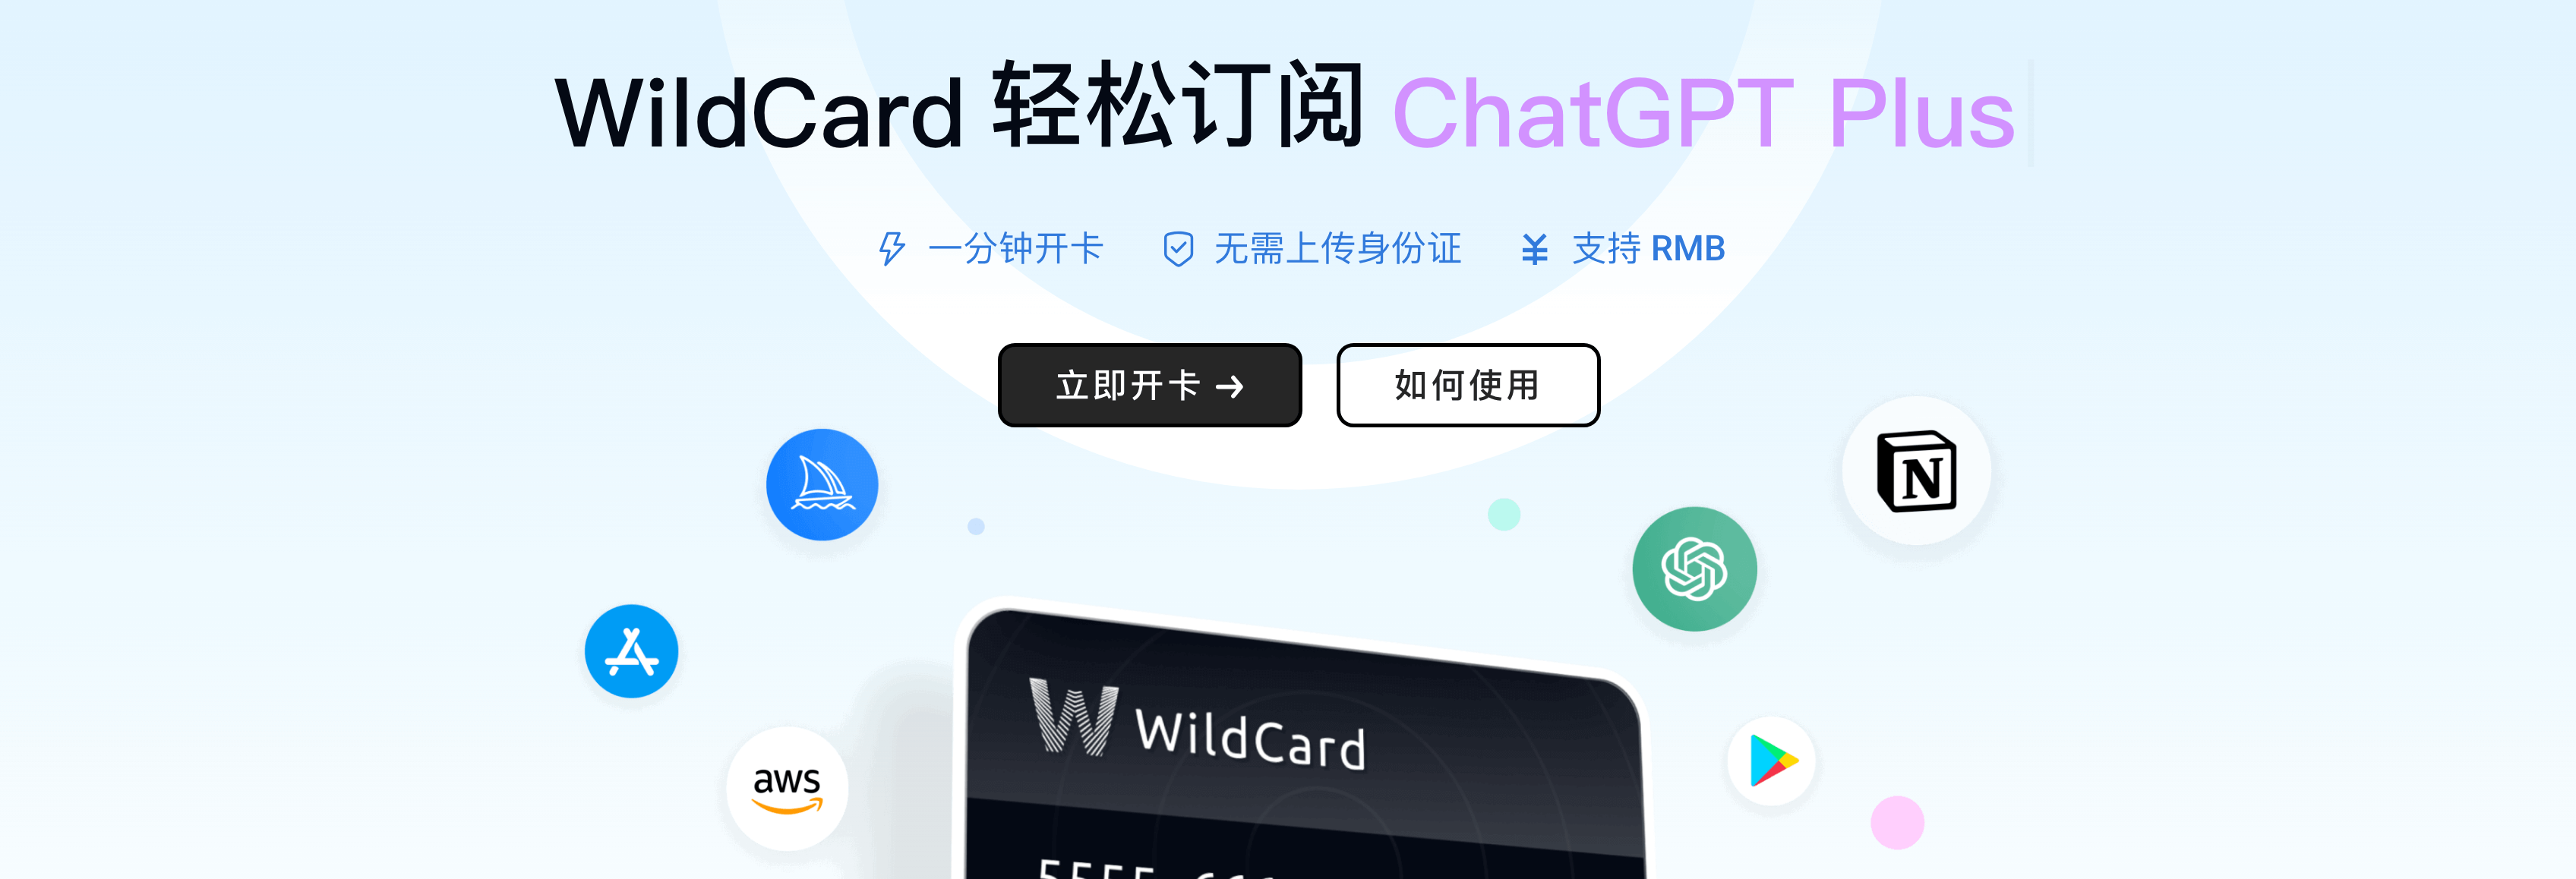 WildCard 信用卡，2 分钟订阅 ChatGPT Plus